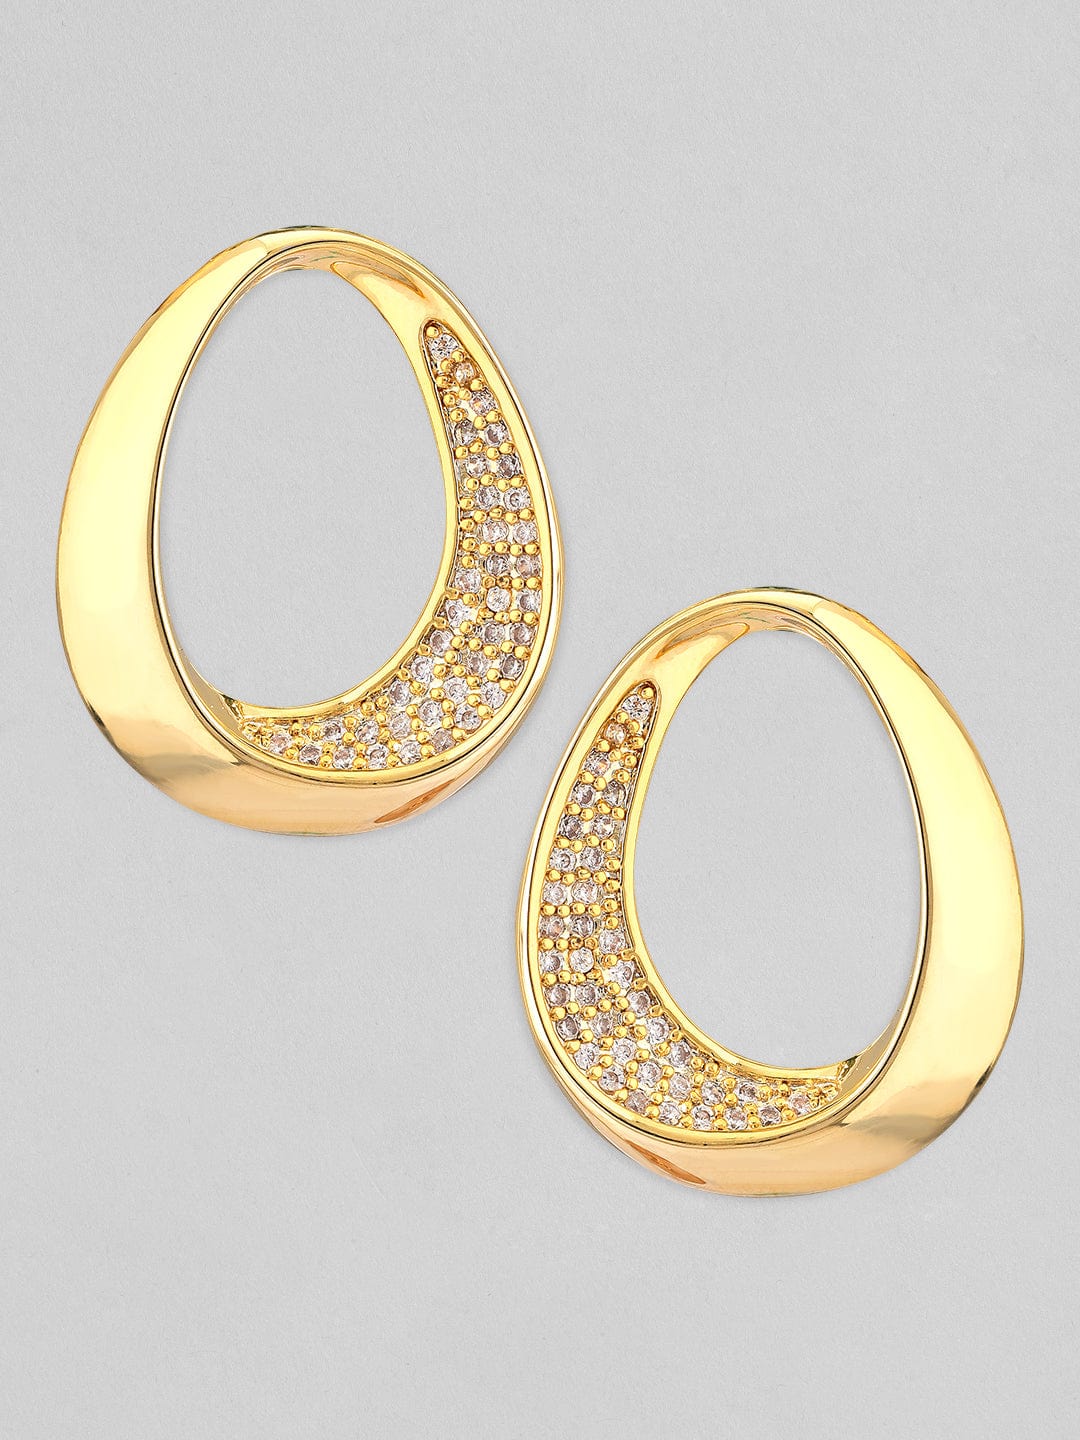 Rubans Voguish 18K Gold Plated Waterproof Stud Zircon Stones In Pave Set Earrings. Earrings